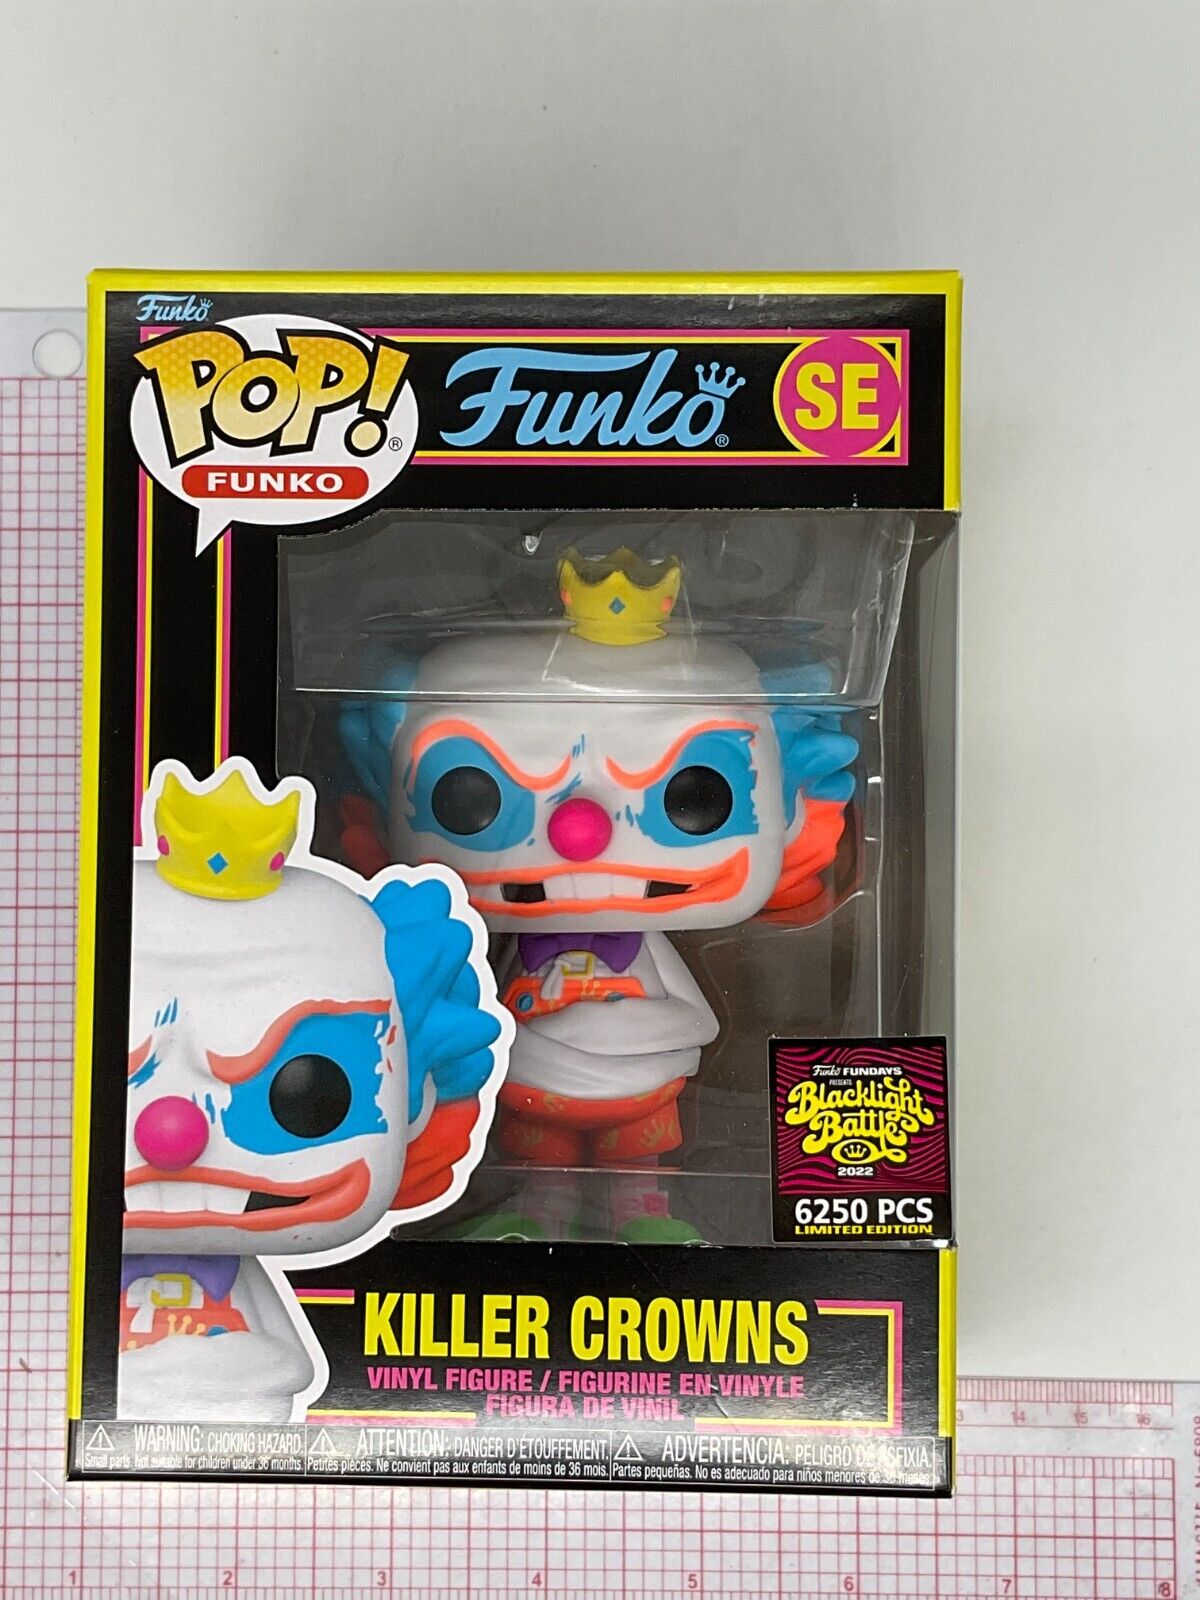 Funko Pop Killer Crowns Black Light - SE Limited 6250 Pcs Figure SEE PICS A03